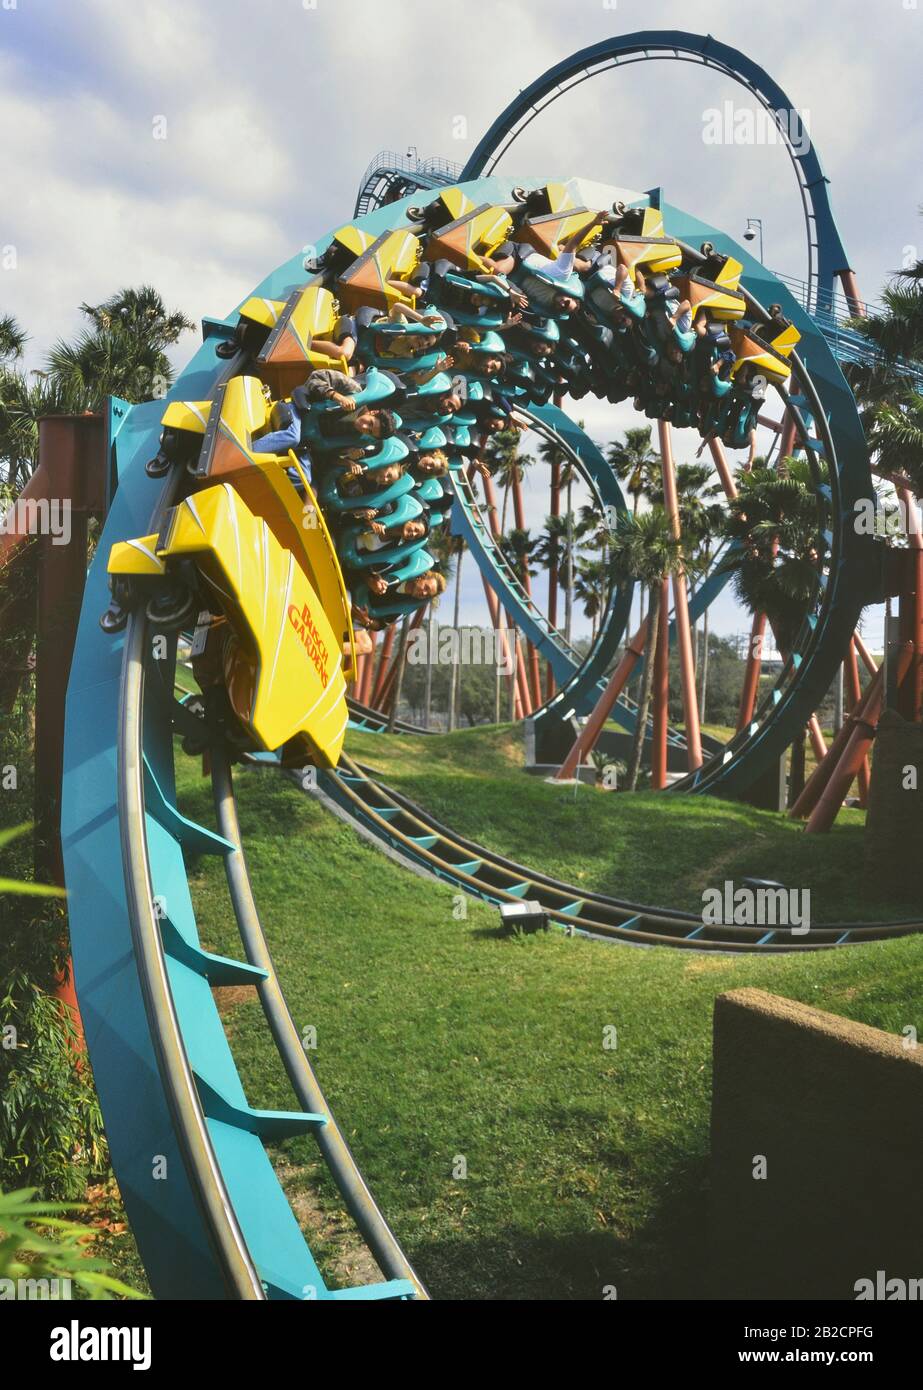 The Kumba Rollercoaster Corkscrew Ride Busch Gardens Tampa Bay